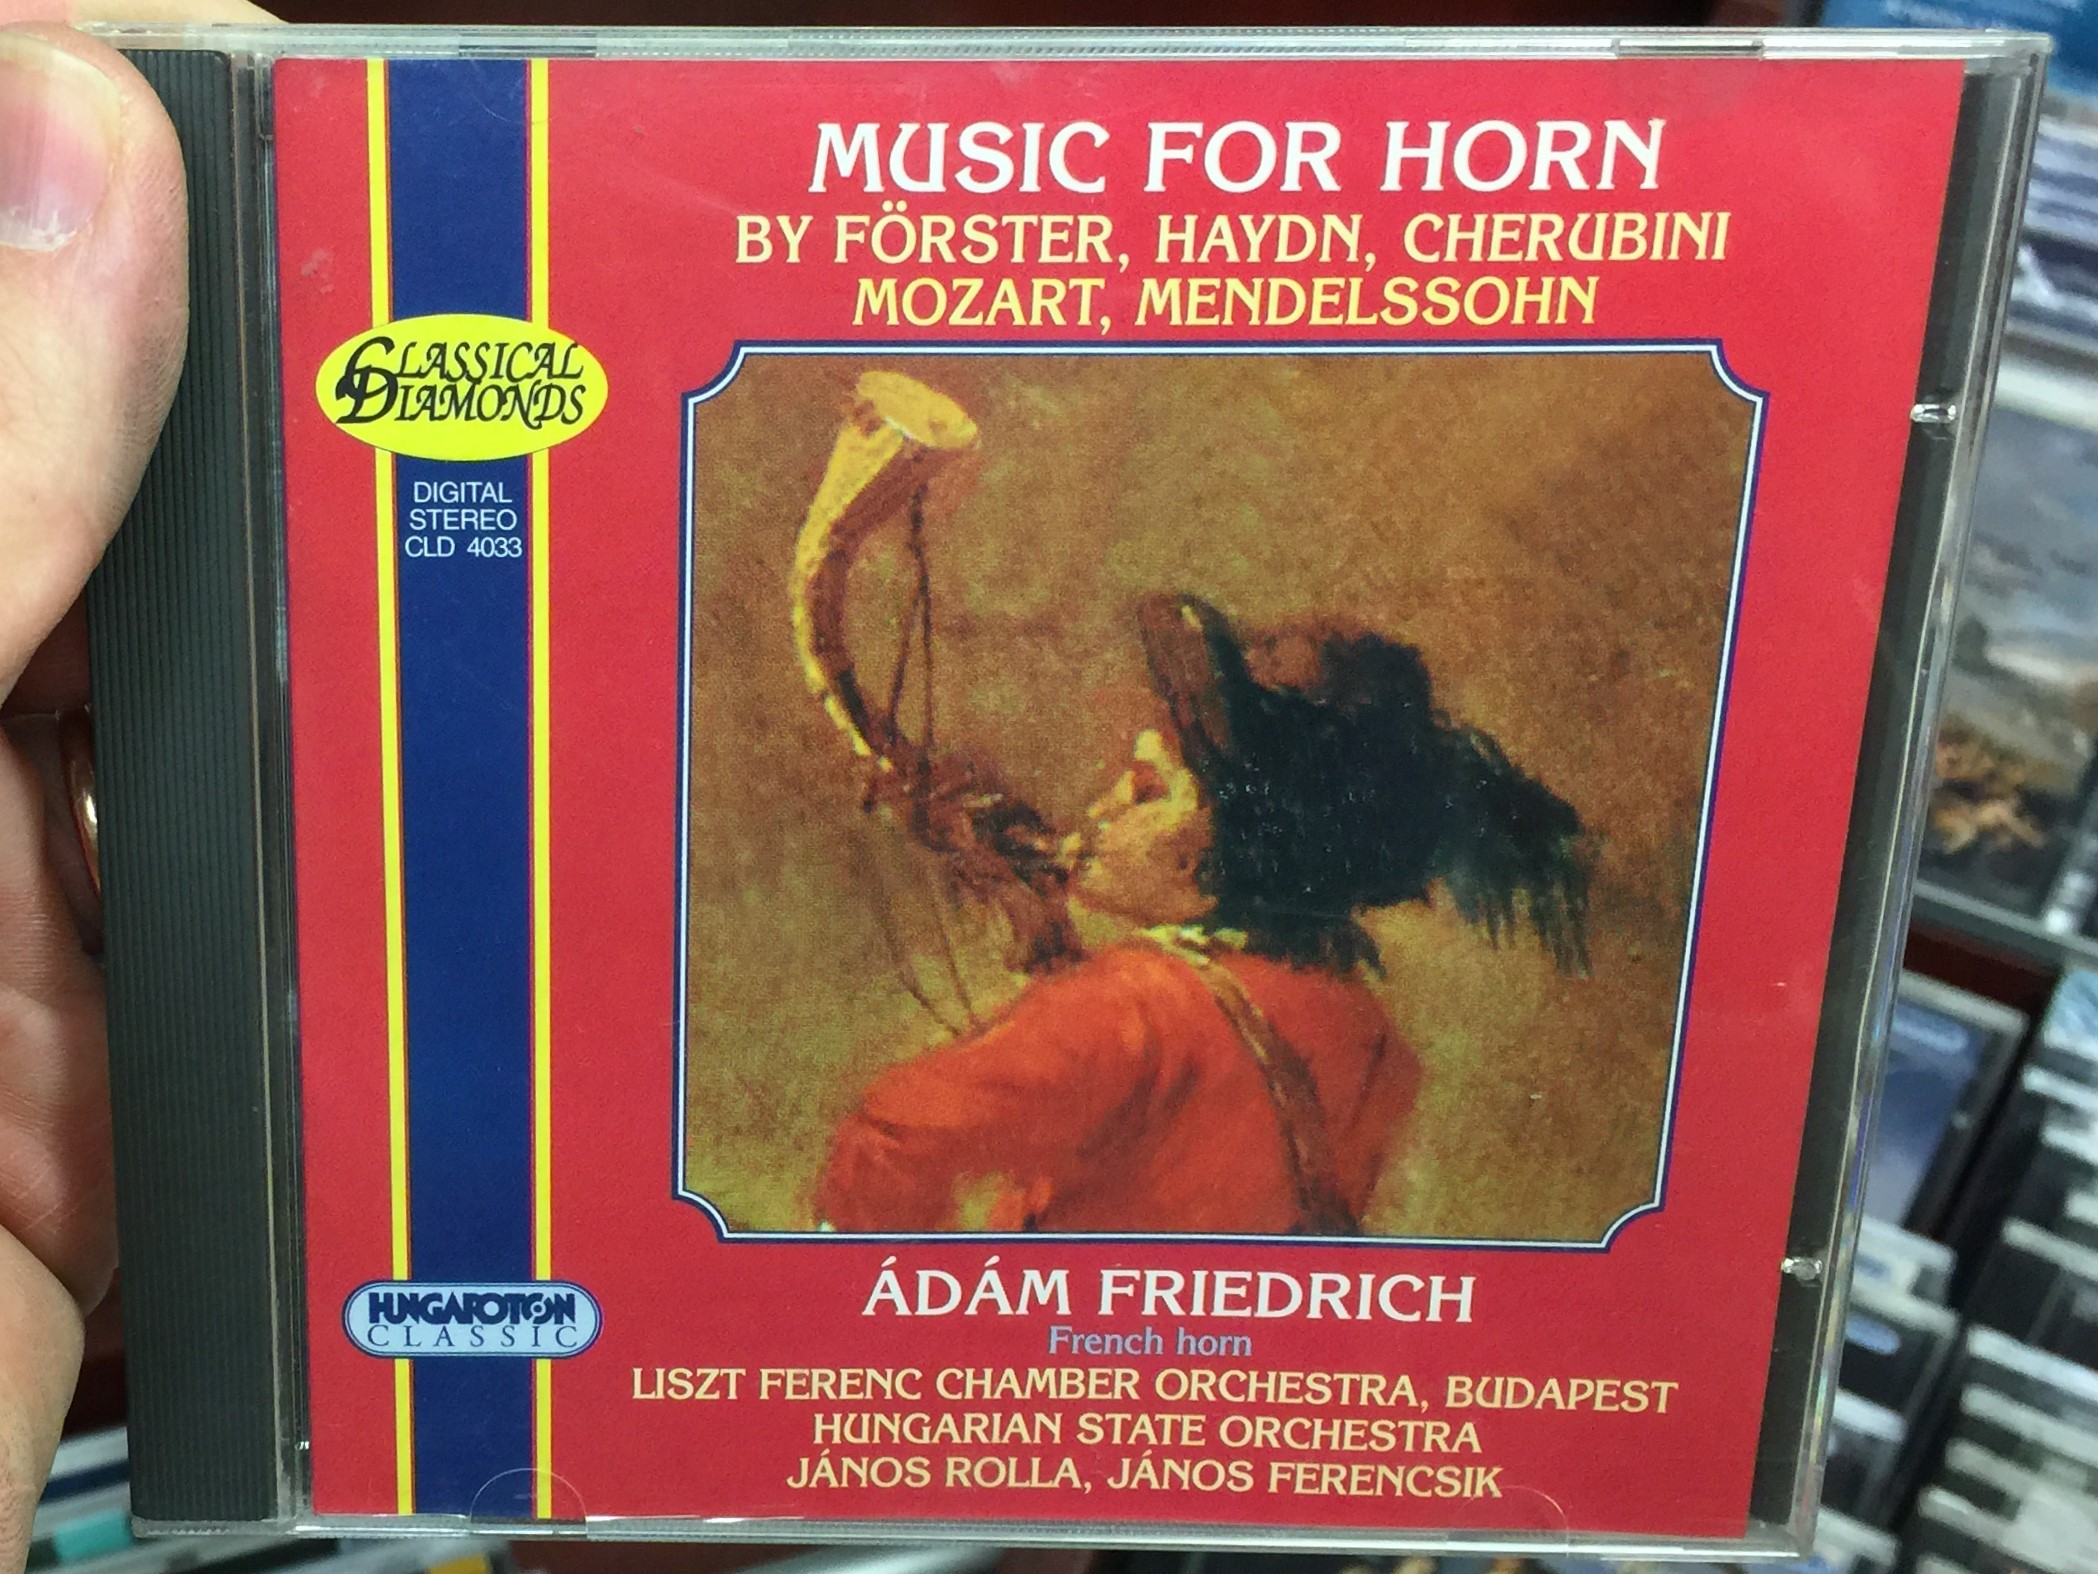 music-for-horn-by-forster-haydn-cherubini-mozart-mendelssohn-adam-friedrich-liszt-ferenc-chamber-orchestra-hungarian-state-orchestra-janos-rolla-janos-ferencsik-hungaroton-classic-audio-c-1-.jpg